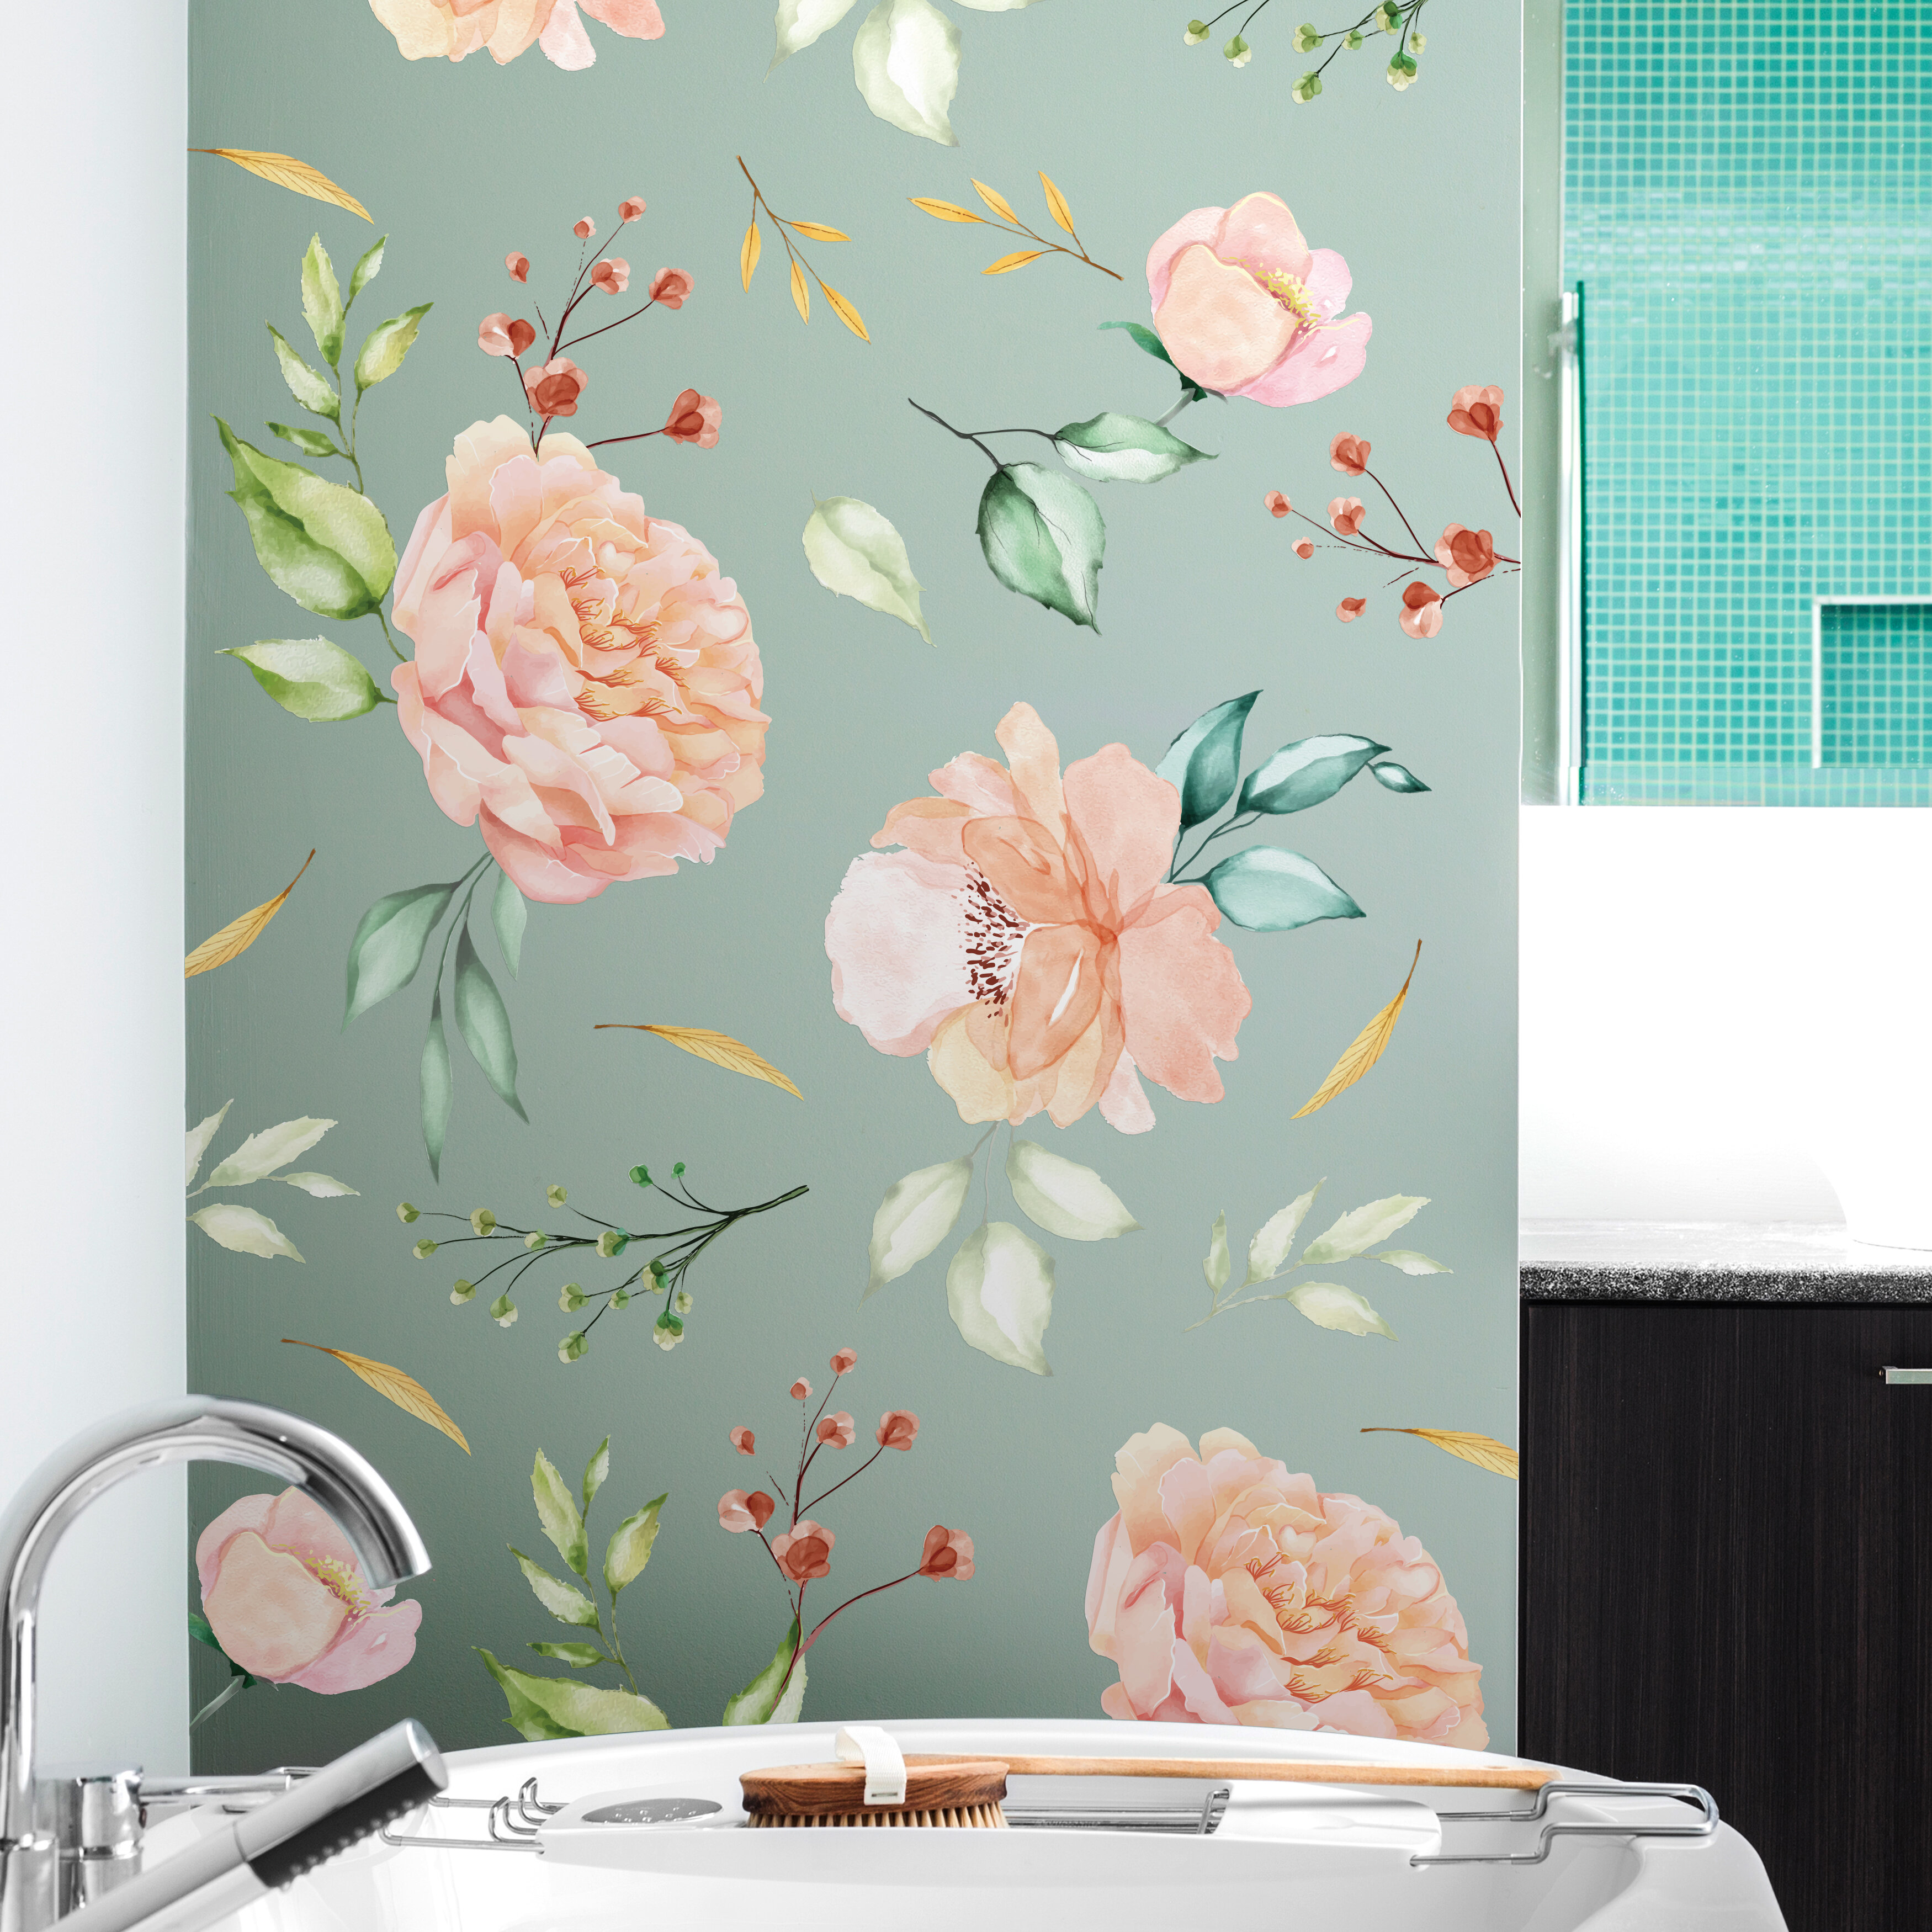 Details about   3D Field Flower Wall Stickers Vinyl Murals Wall Print Decal Deco Art AJ STORE AU 